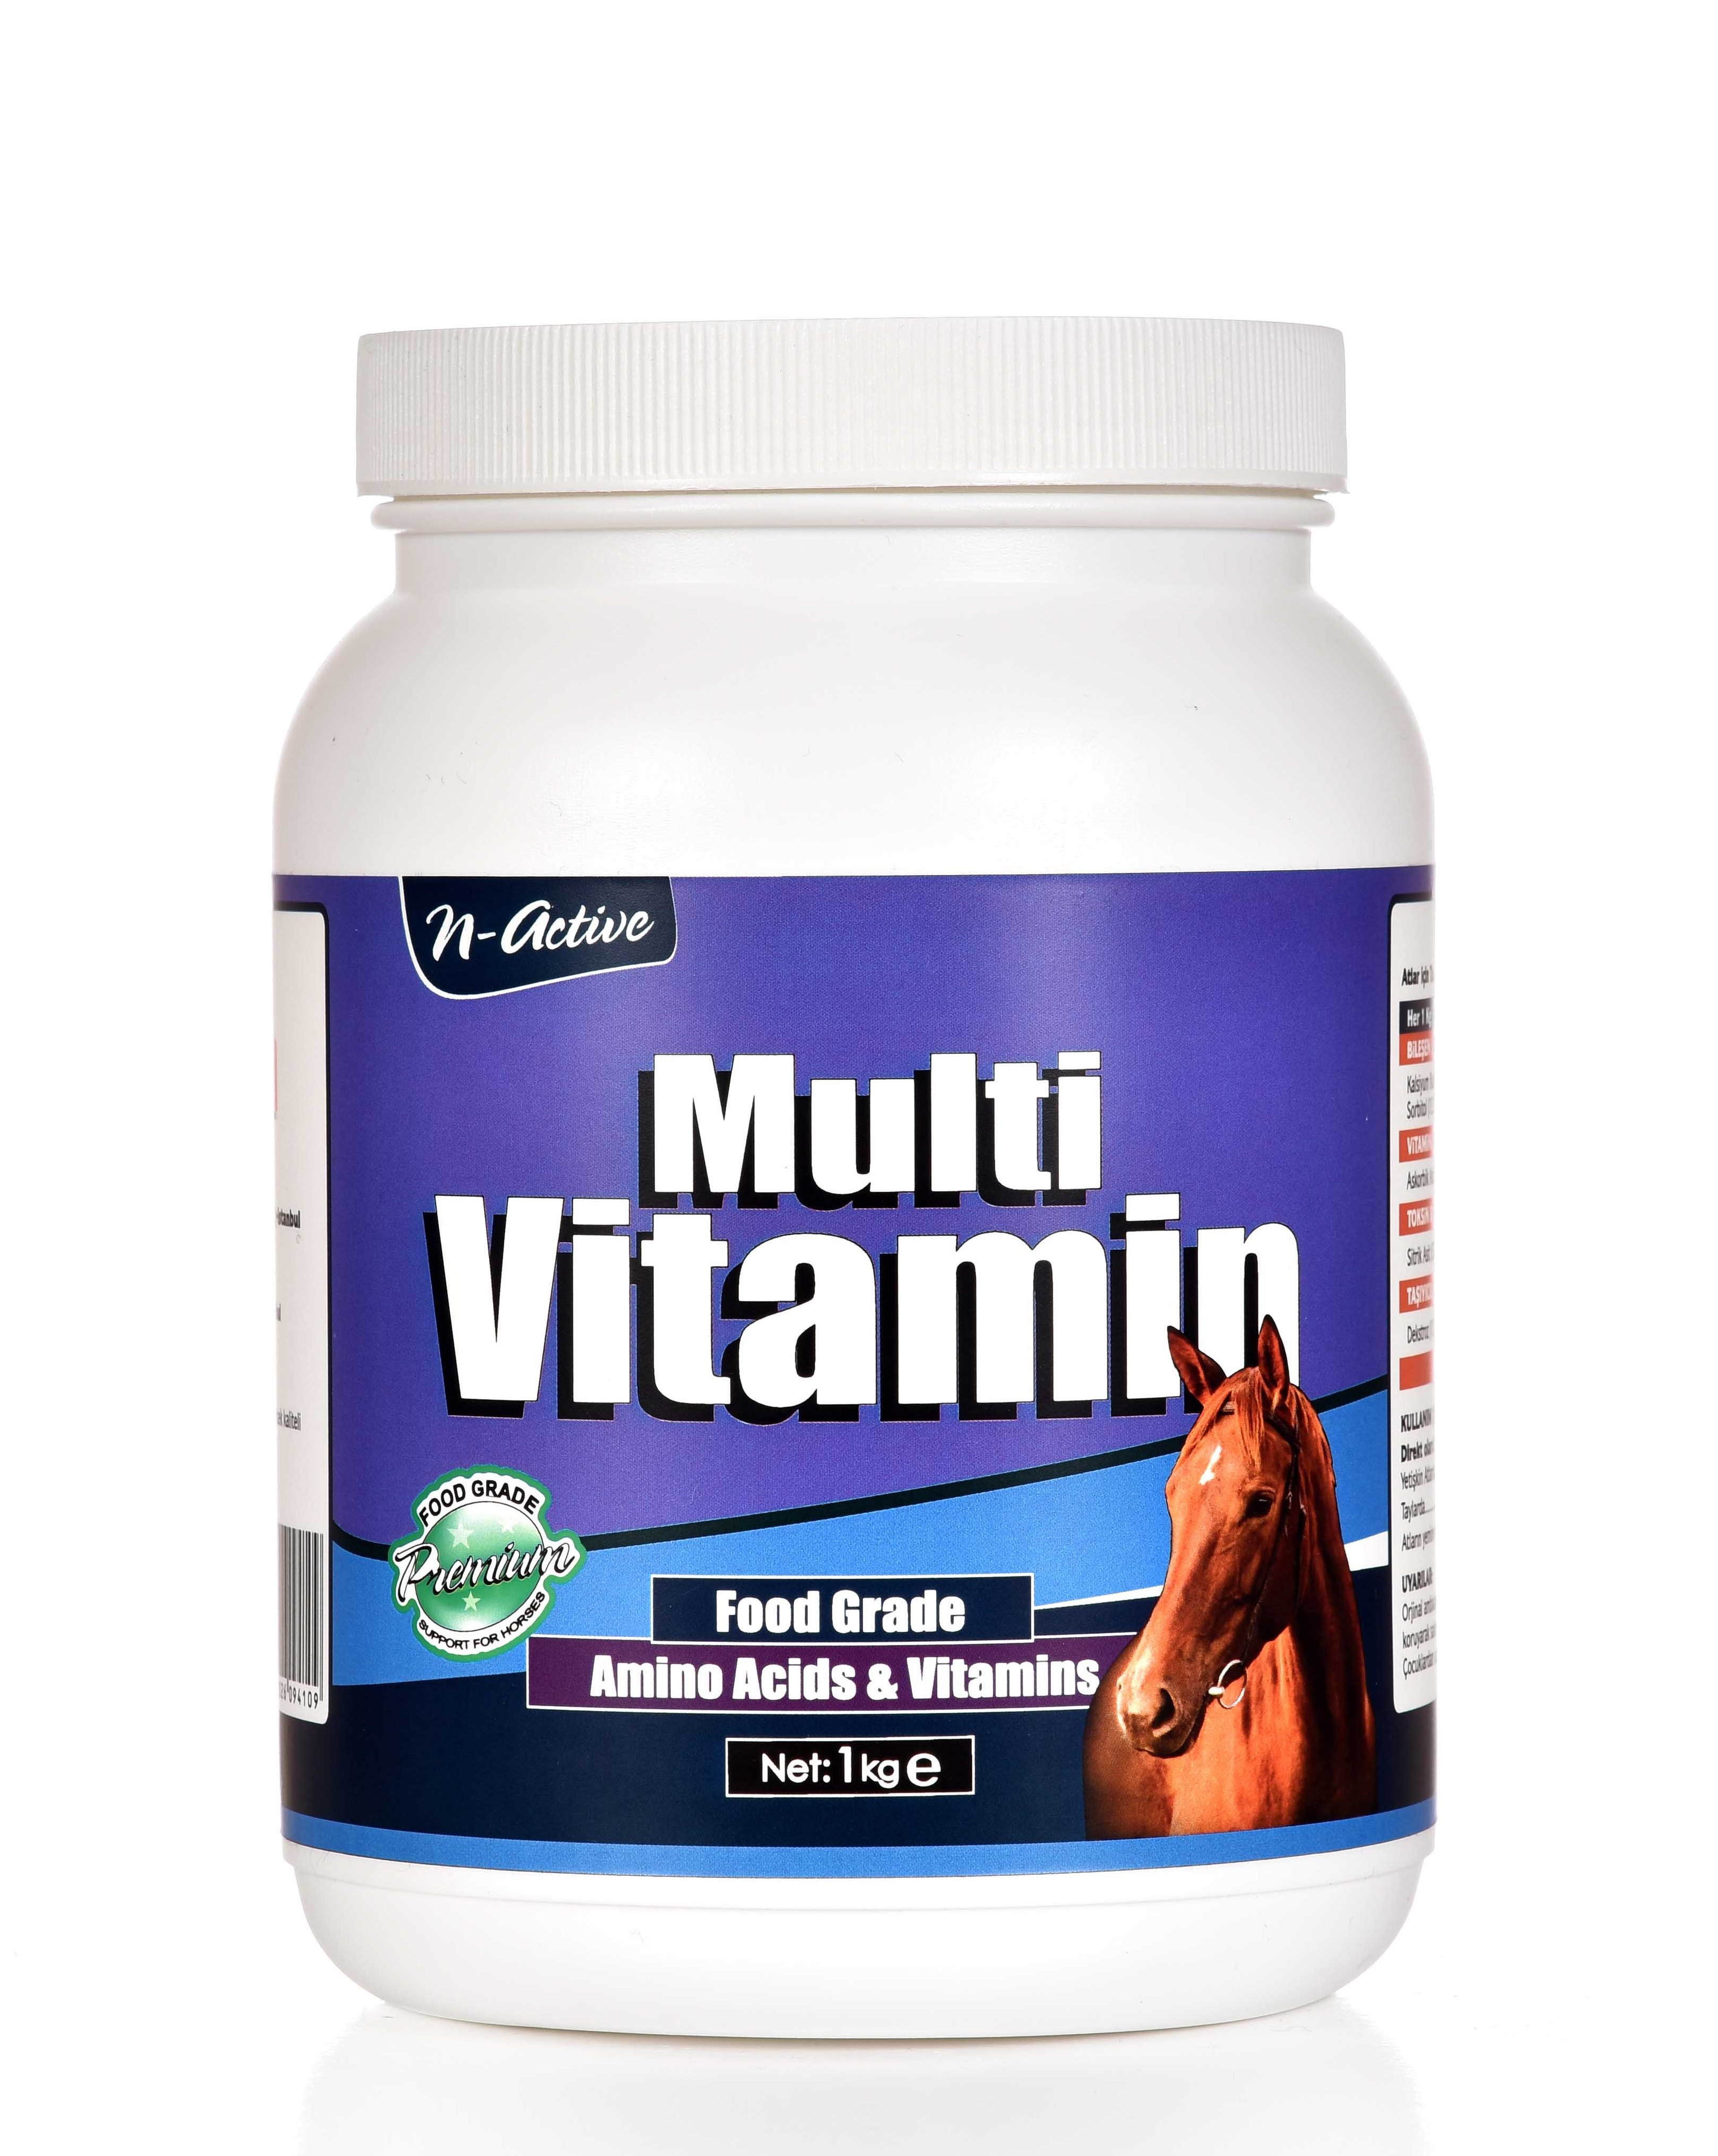 Мультивитамин Актив. Витамины Мульти 1. Мультивитамины Active. Мультивитамины Multi Forte. N active